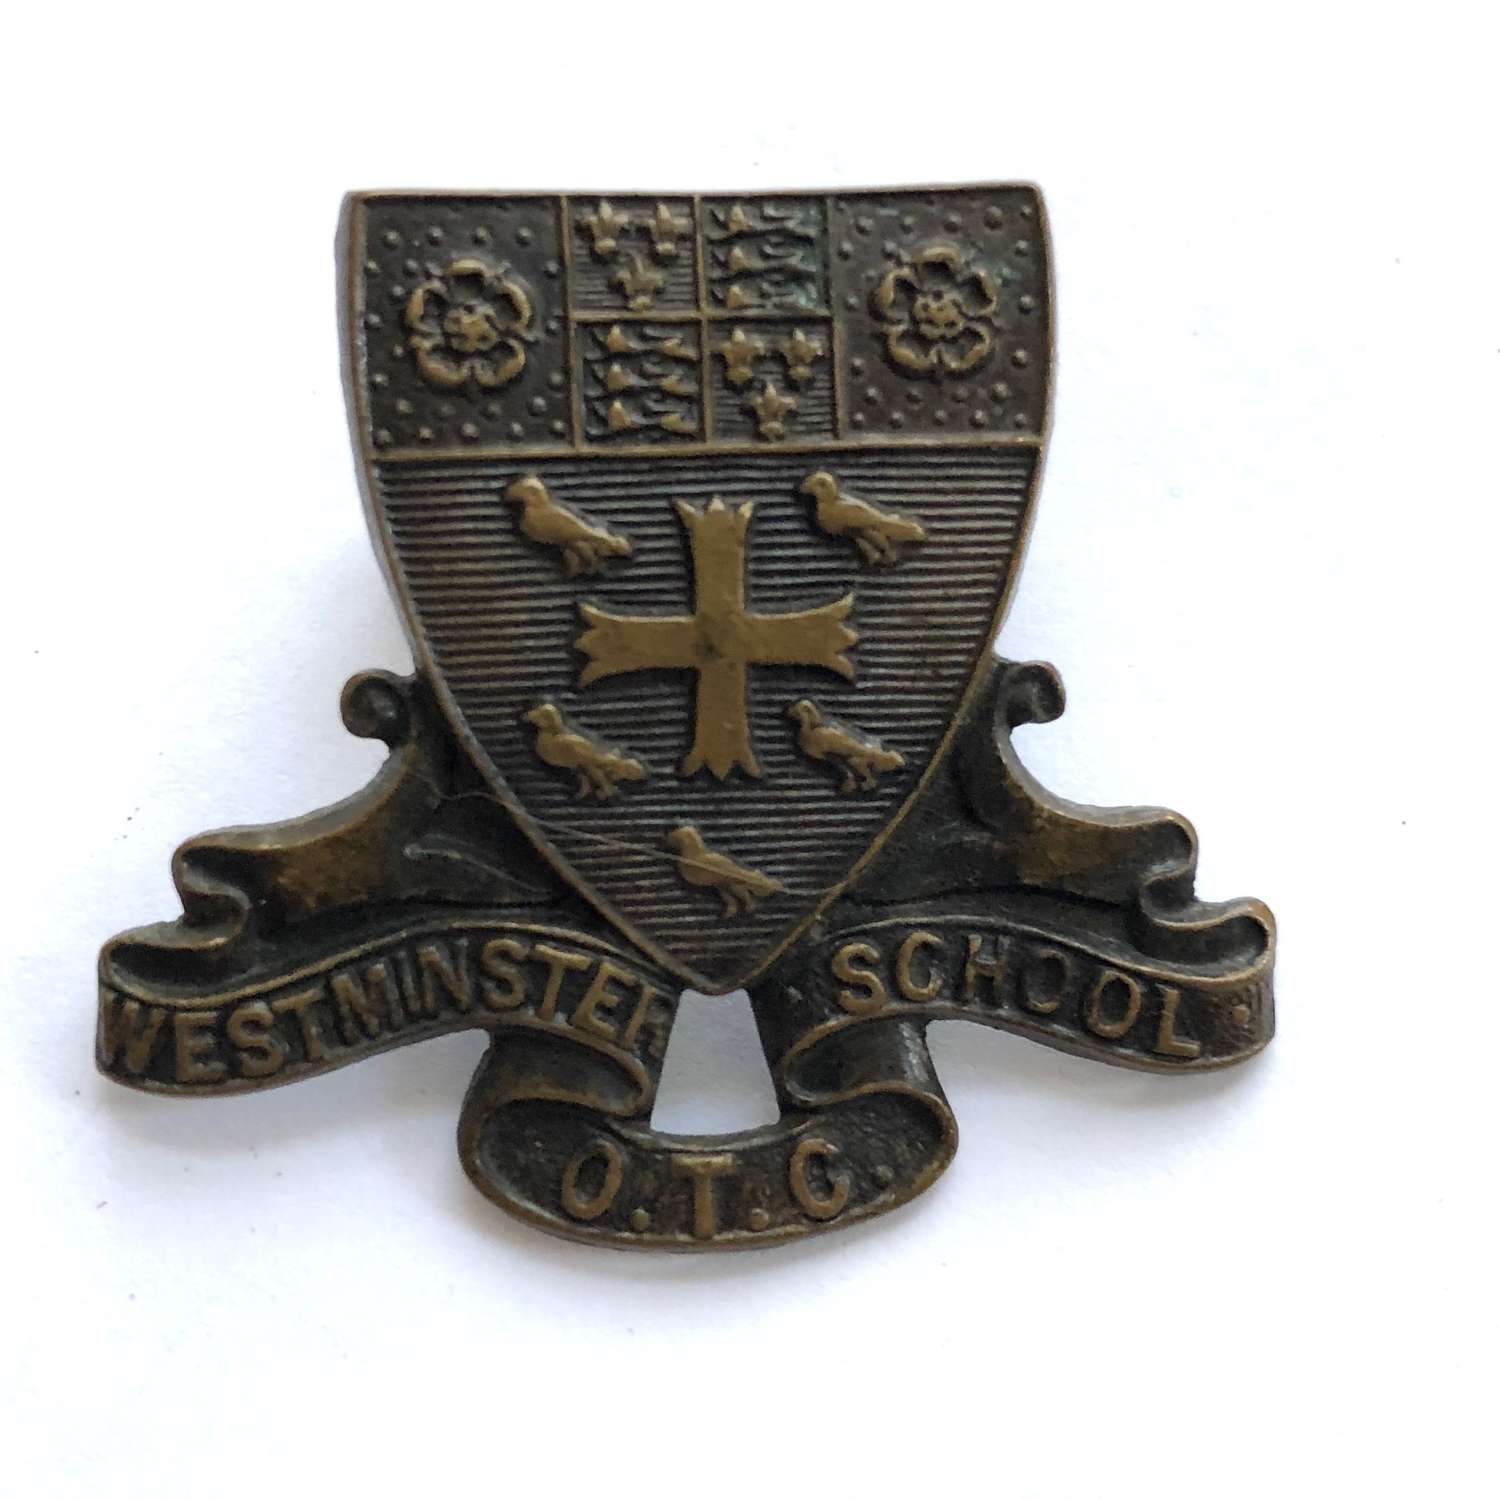 Westminster School OTC, London cap badge circa 1908-40